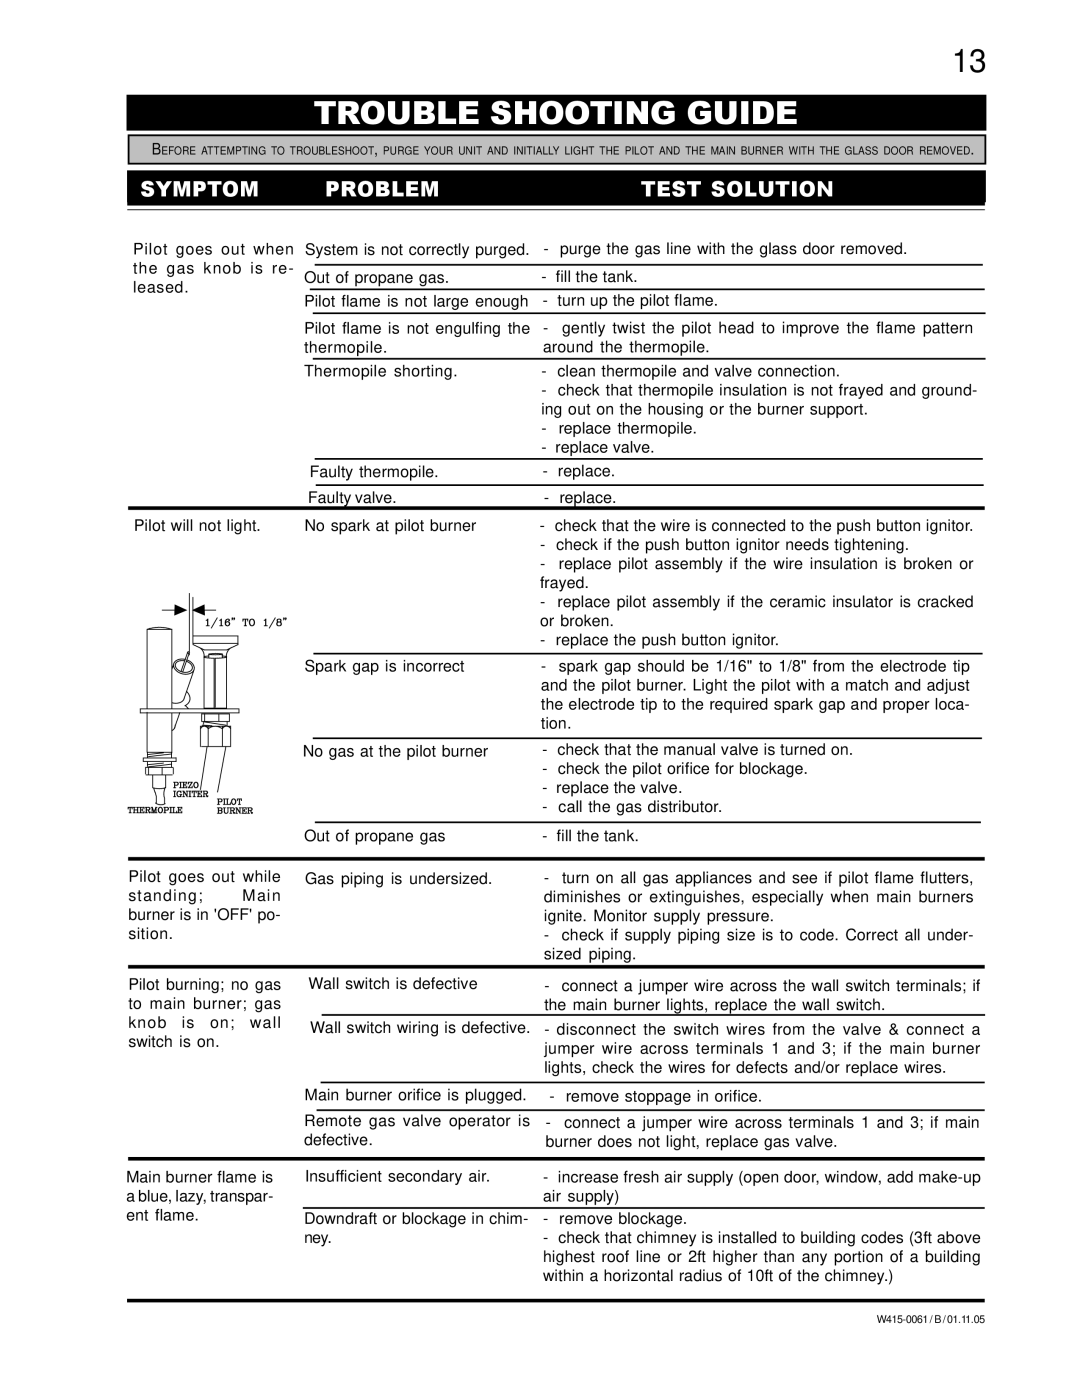 Napoleon Fireplaces GI 3600-P, GI 3600-N manual Trouble Shooting Guide, Symptom, Problem, Test Solution 